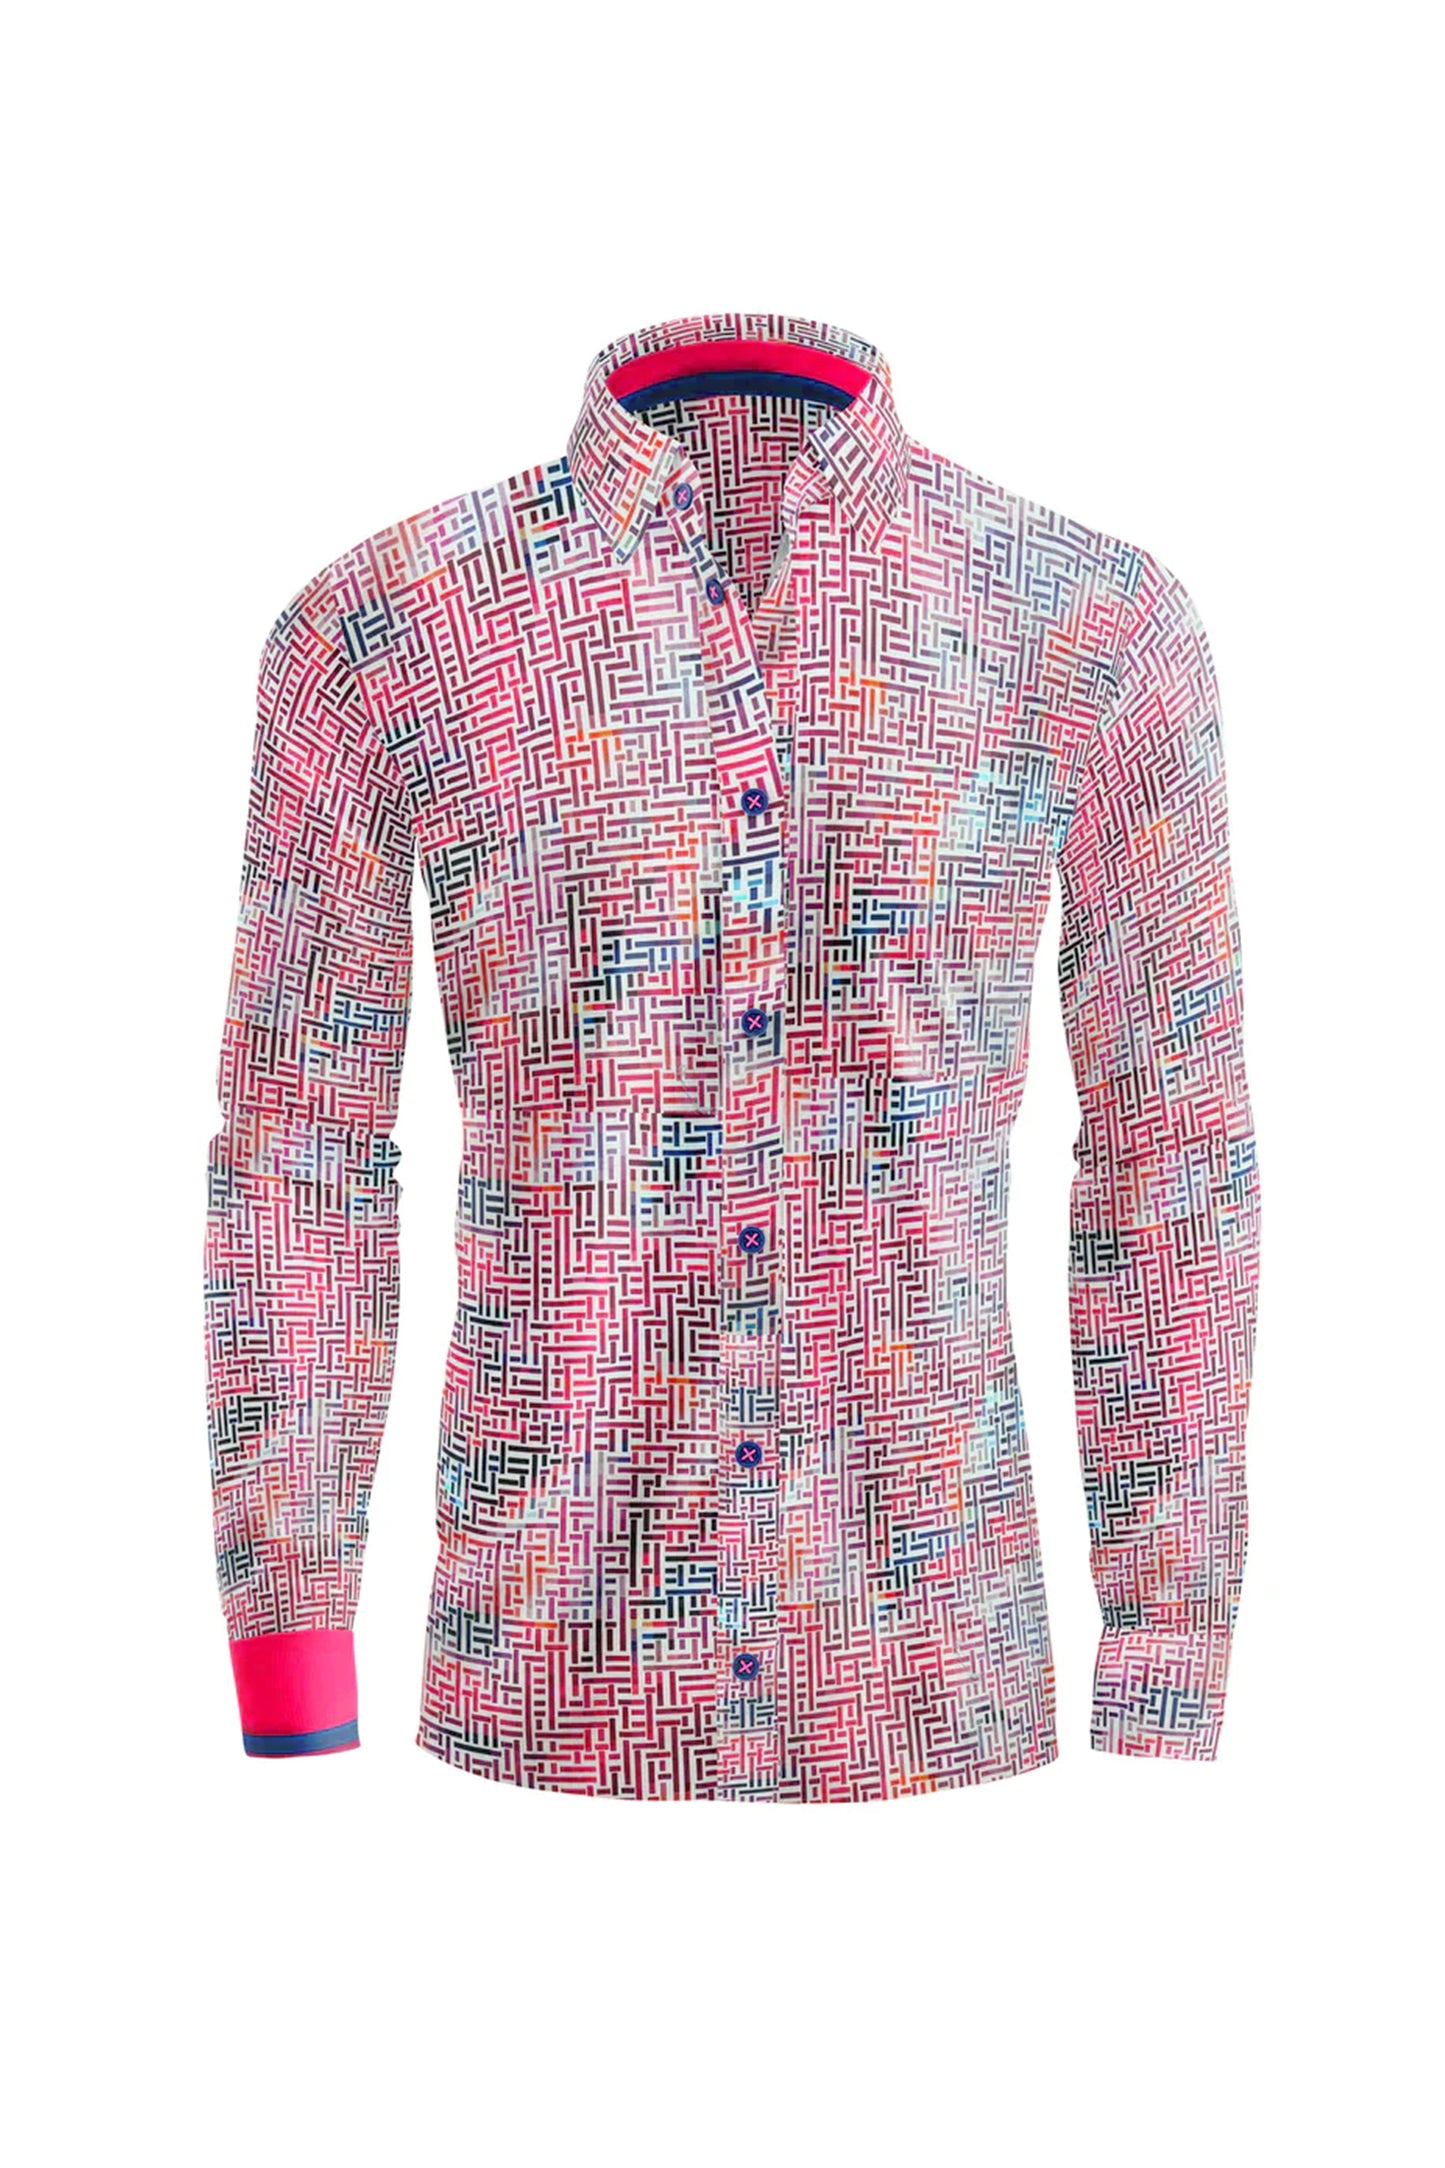 Vercini tetris art premium shirt CASUAL SHIRT On Sale 30% Off Vercini